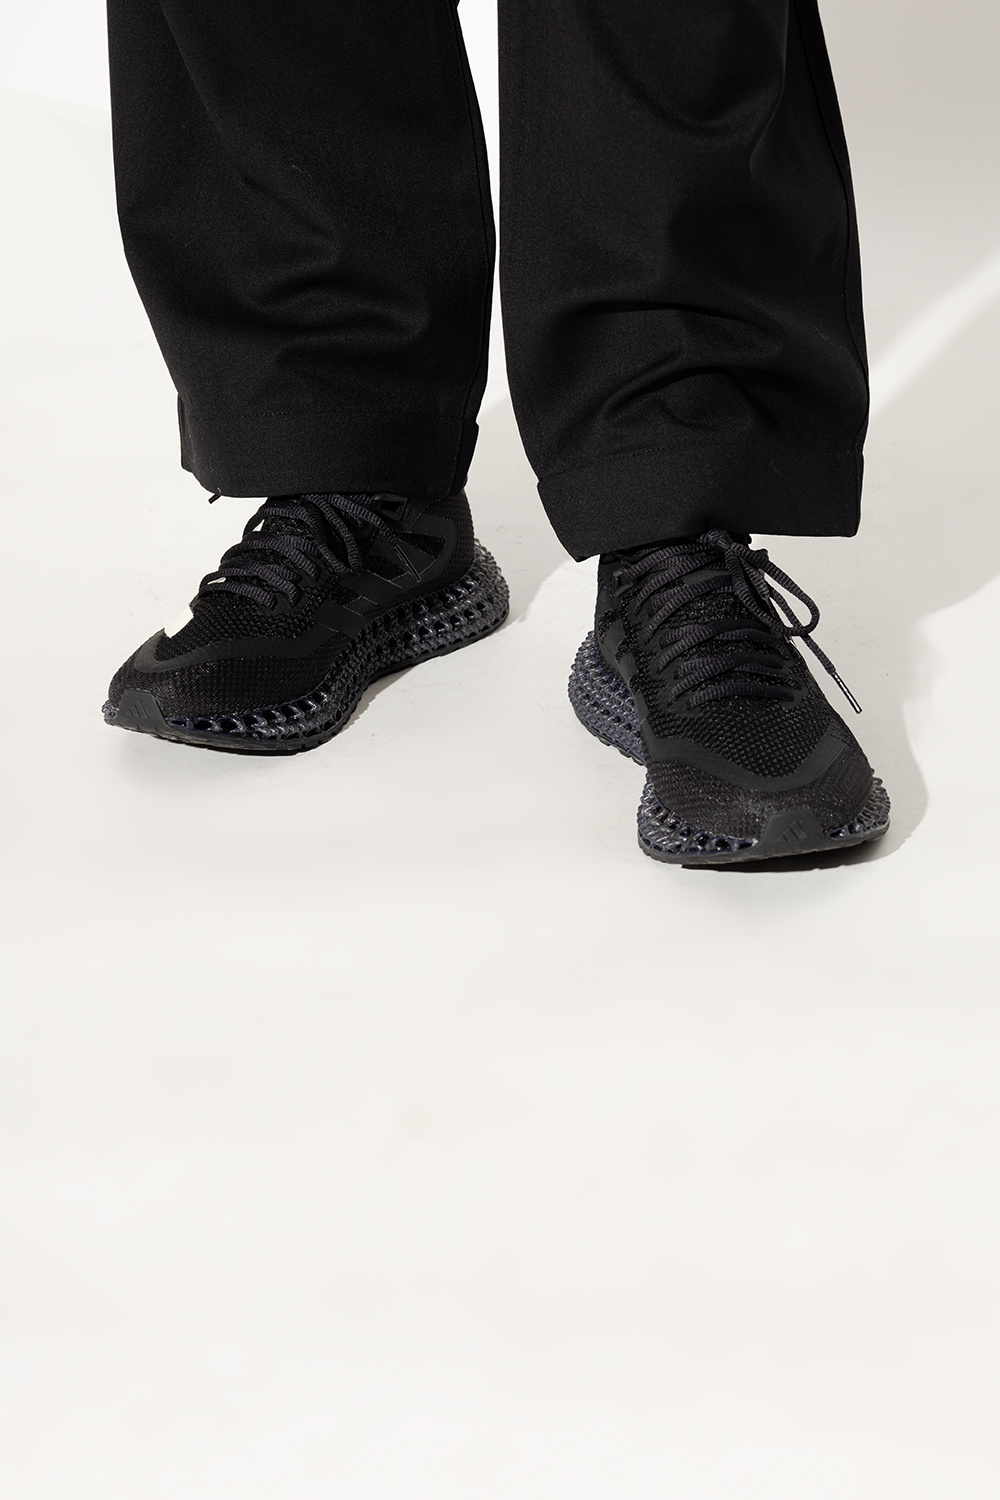 Y-3 Yohji Yamamoto 'RUNNER 4D FWD' sneakers | Women's Shoes | Vitkac